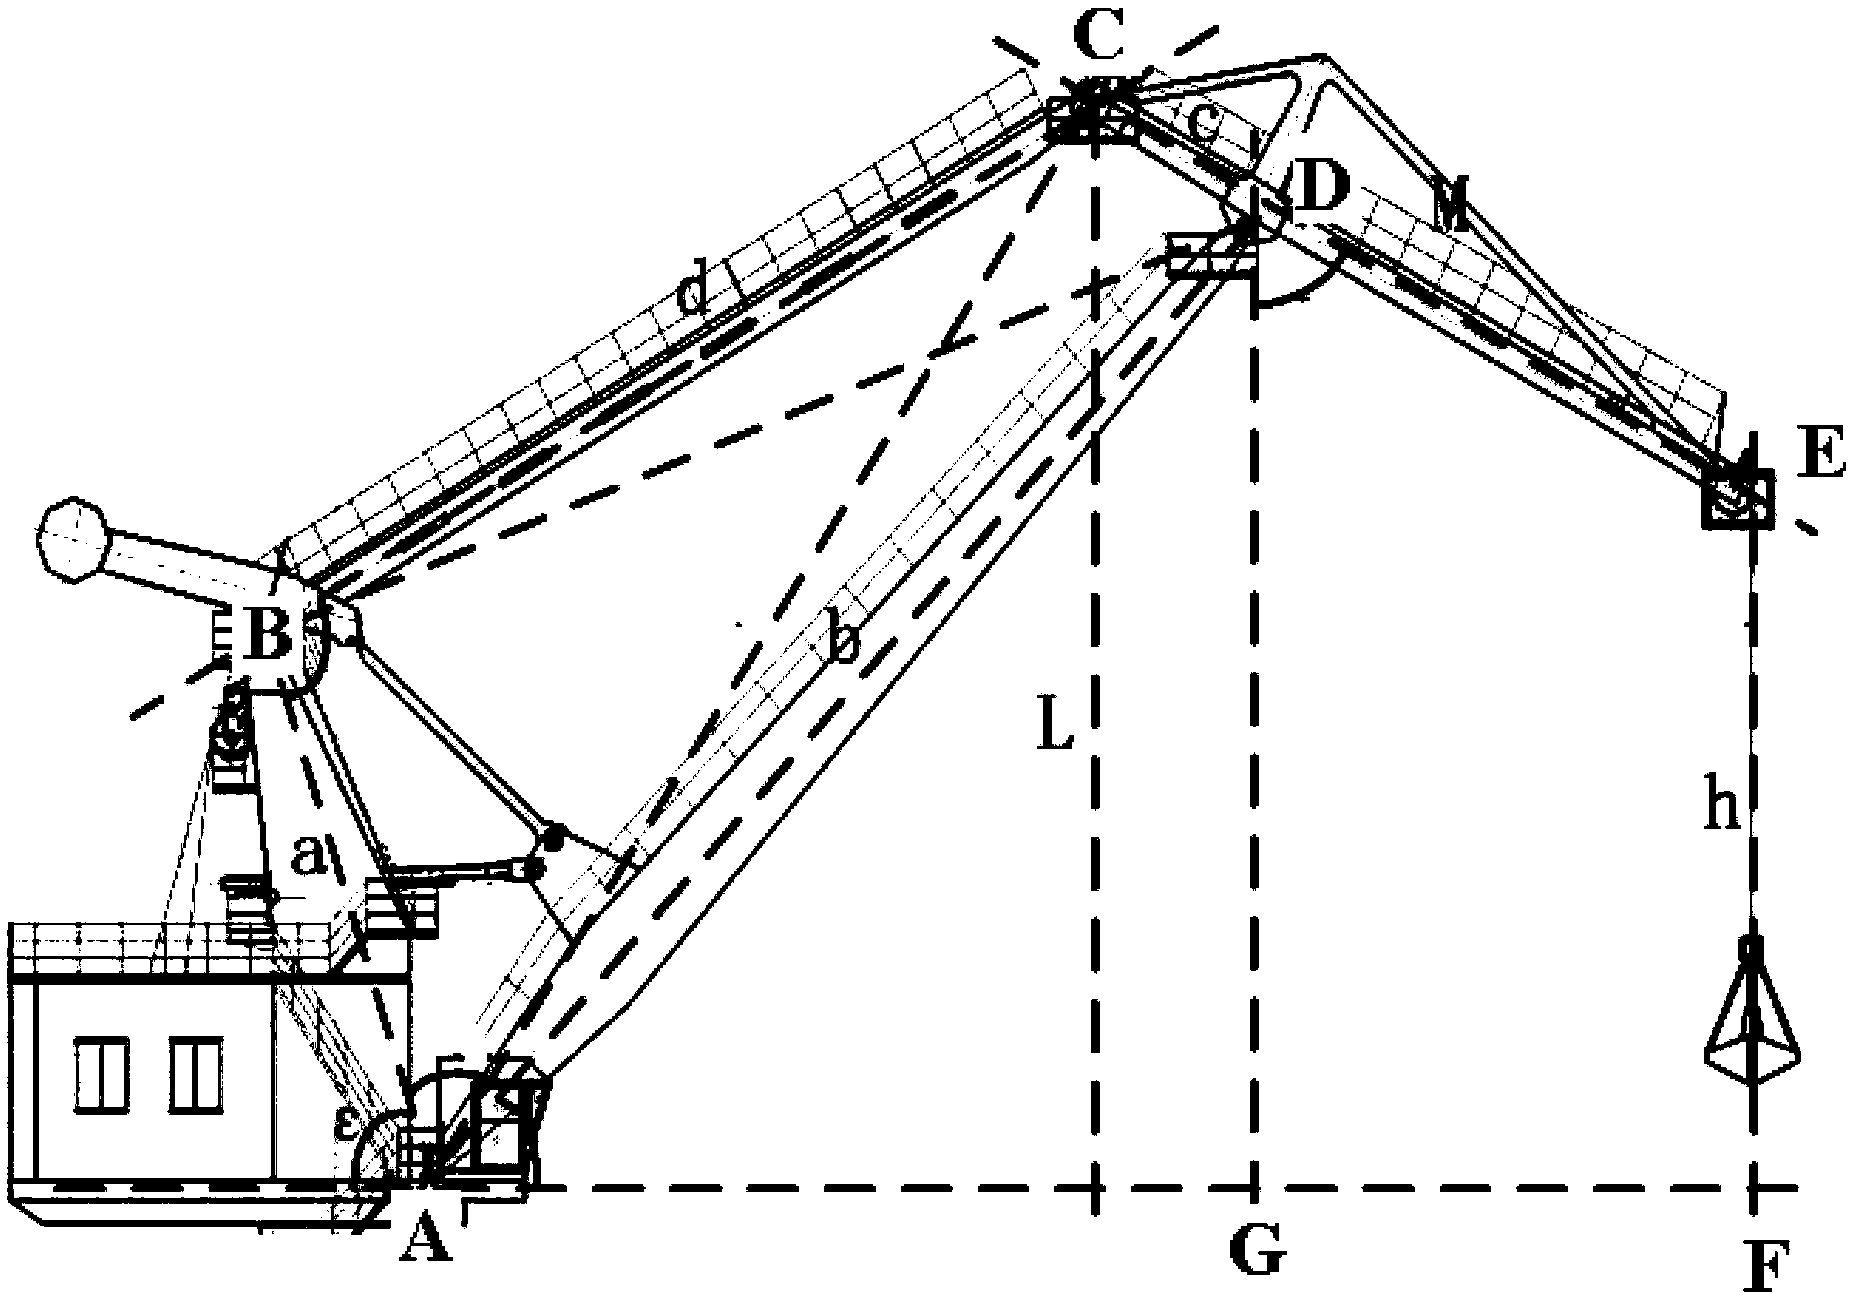 Gantry crane attitude monitoring system and method based on beidou satellite positioning system